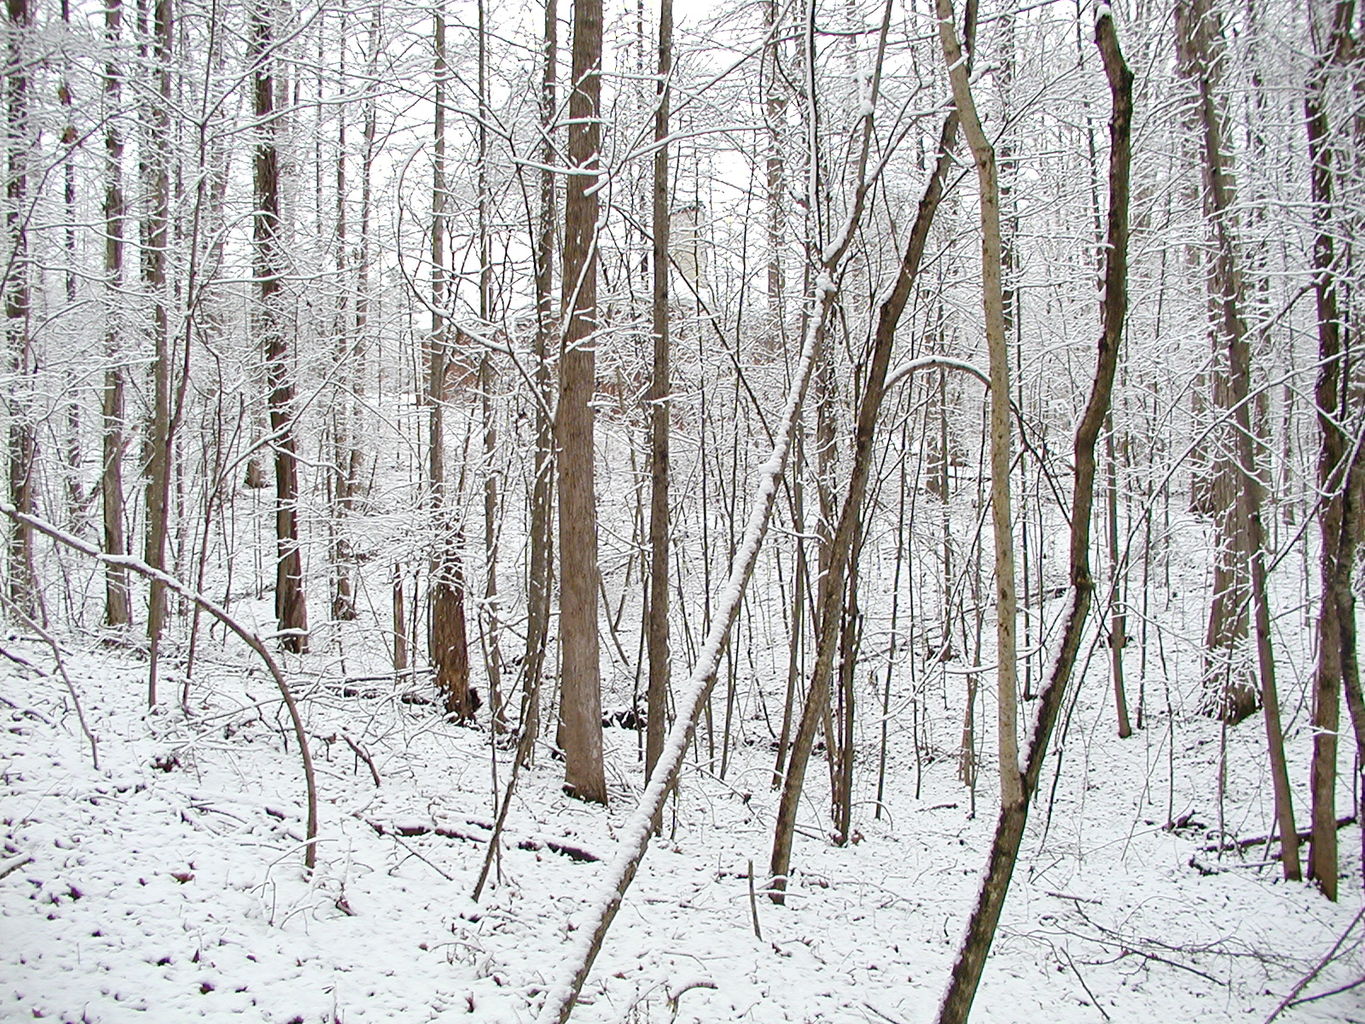 Snow - February 2004
